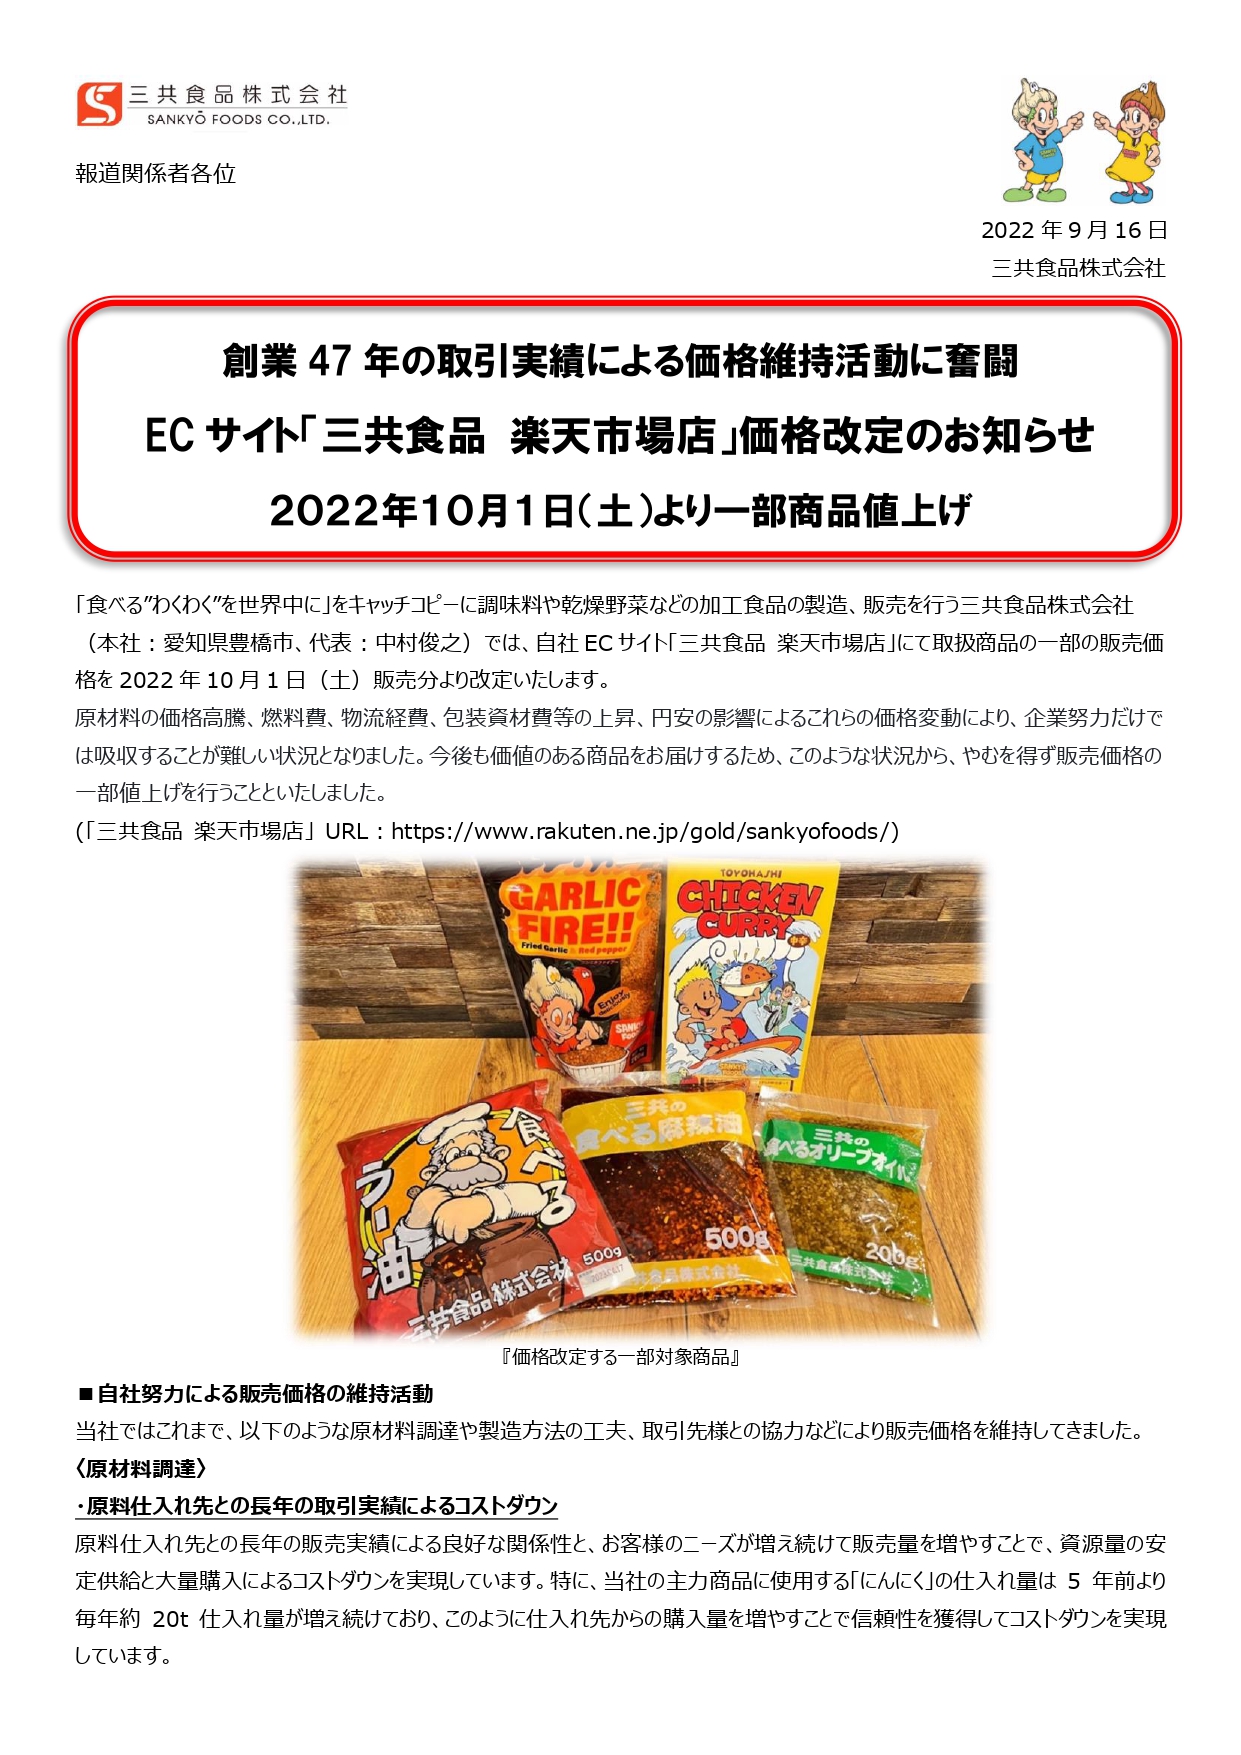 ECサイト「三共食品 楽天市場店」価格改定のお知らせ